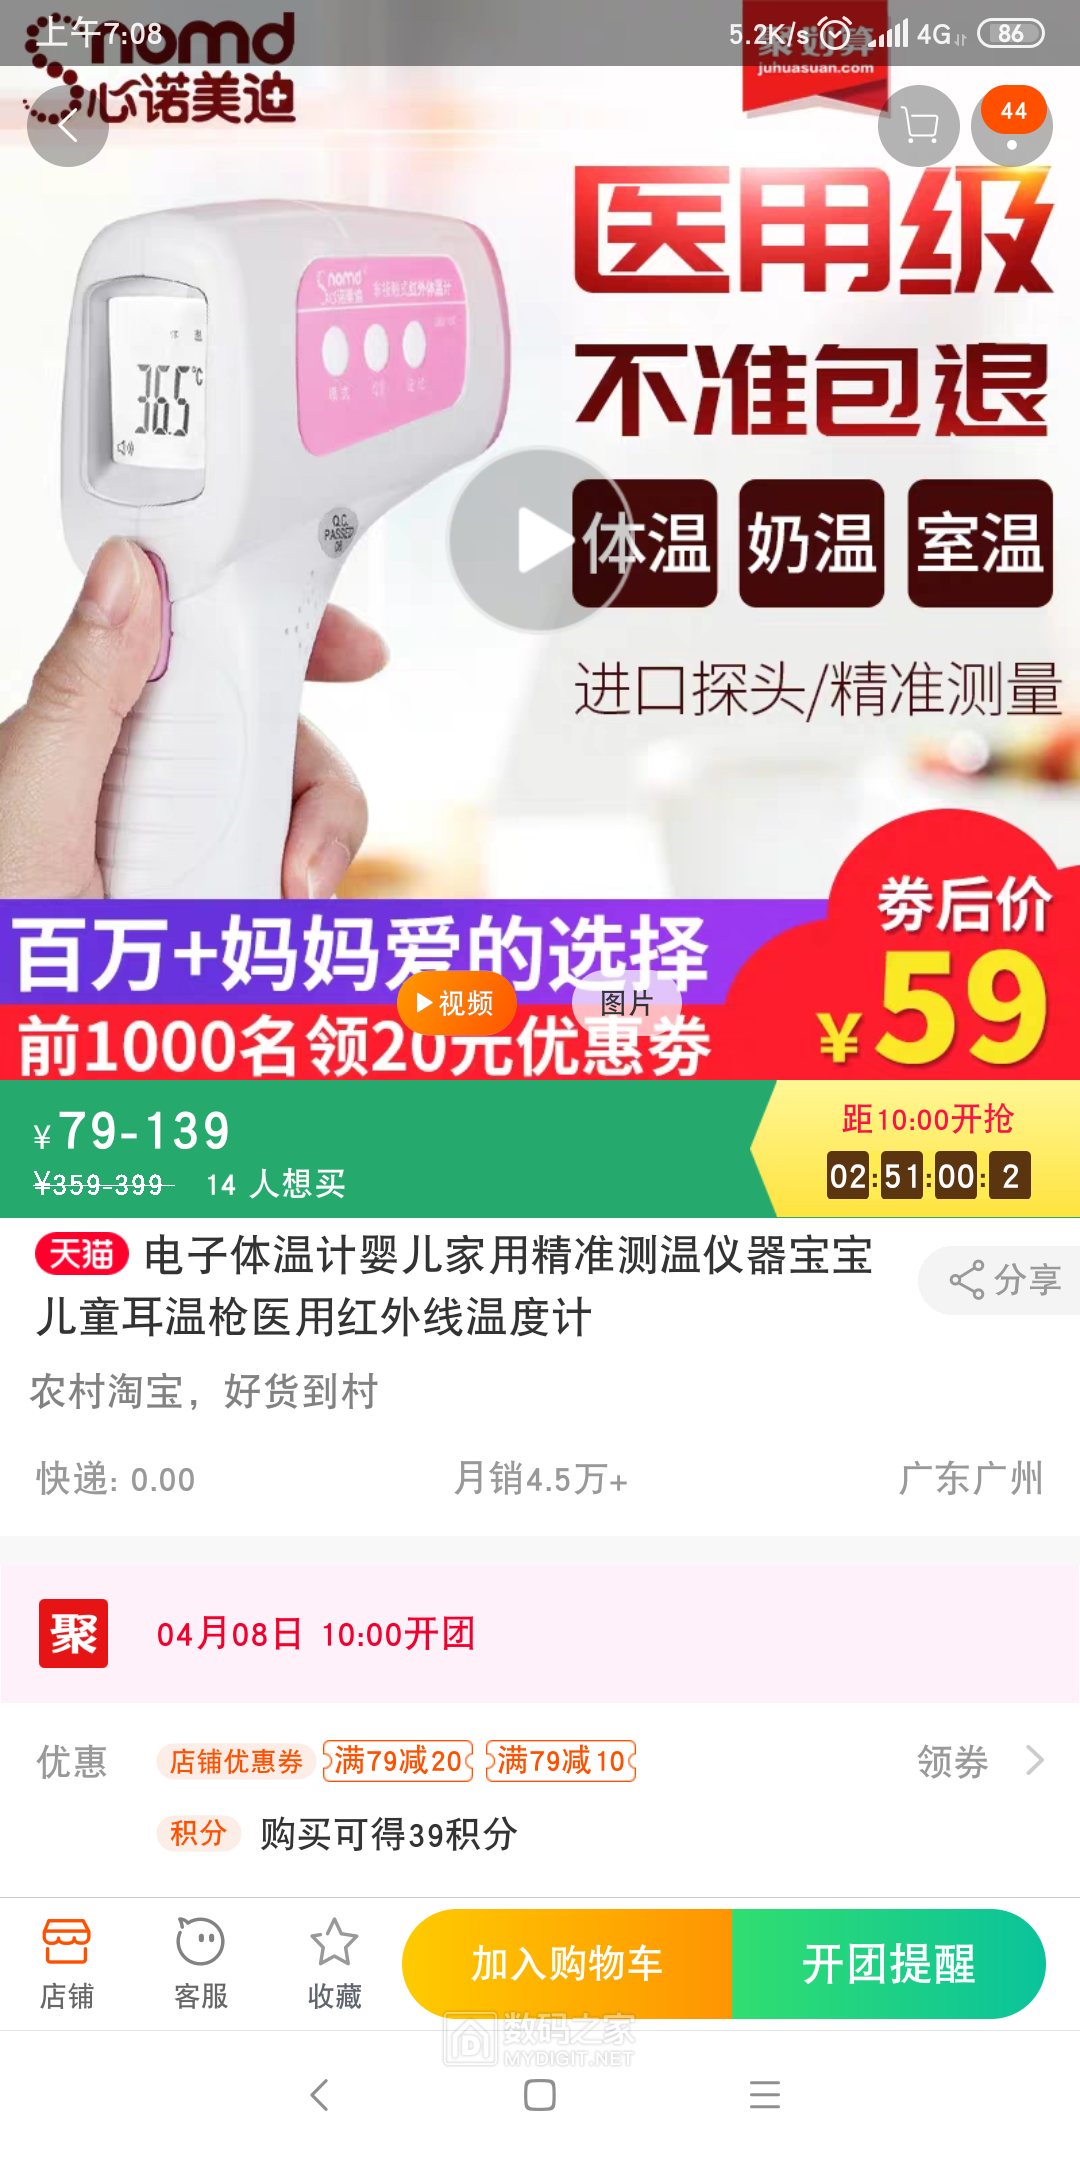 Screenshot_2019-04-08-07-09-04-170_com.taobao.taobao.png